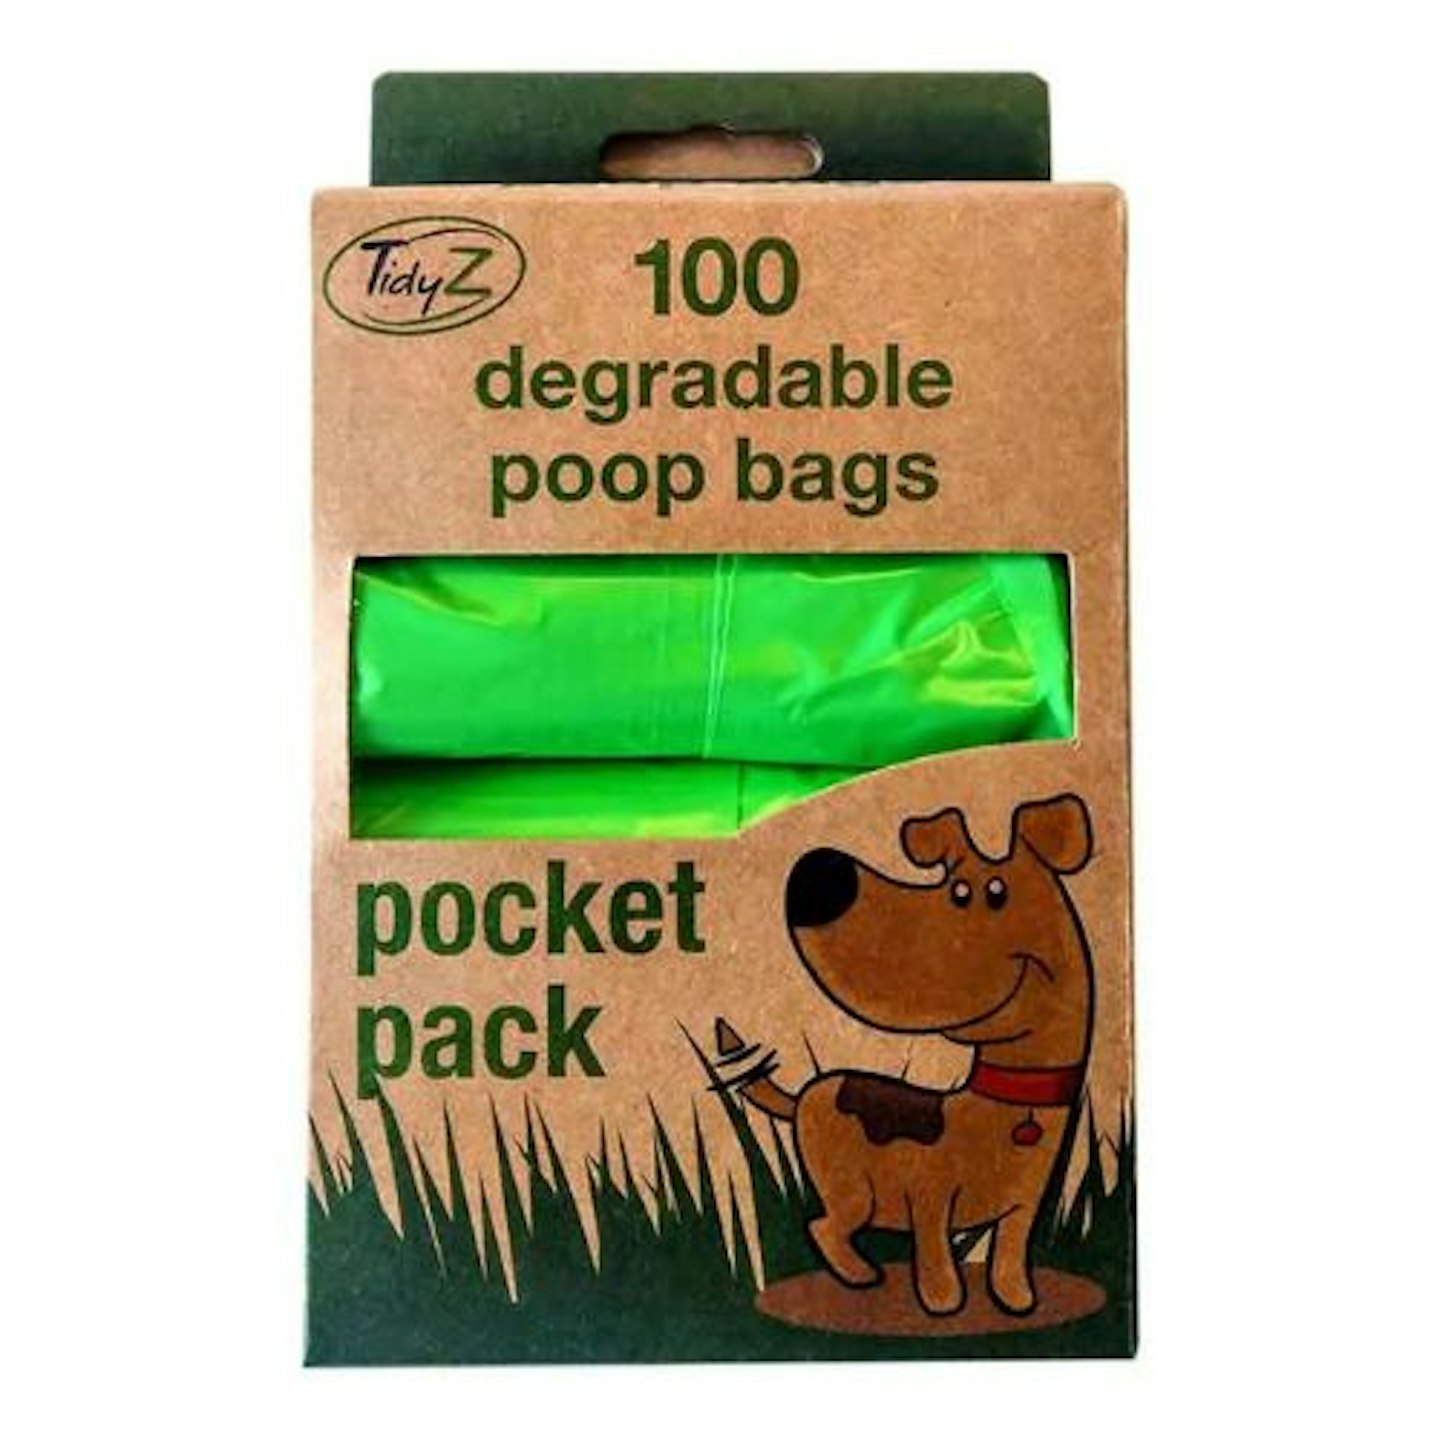 Tidyz Degradable Poop Bags 